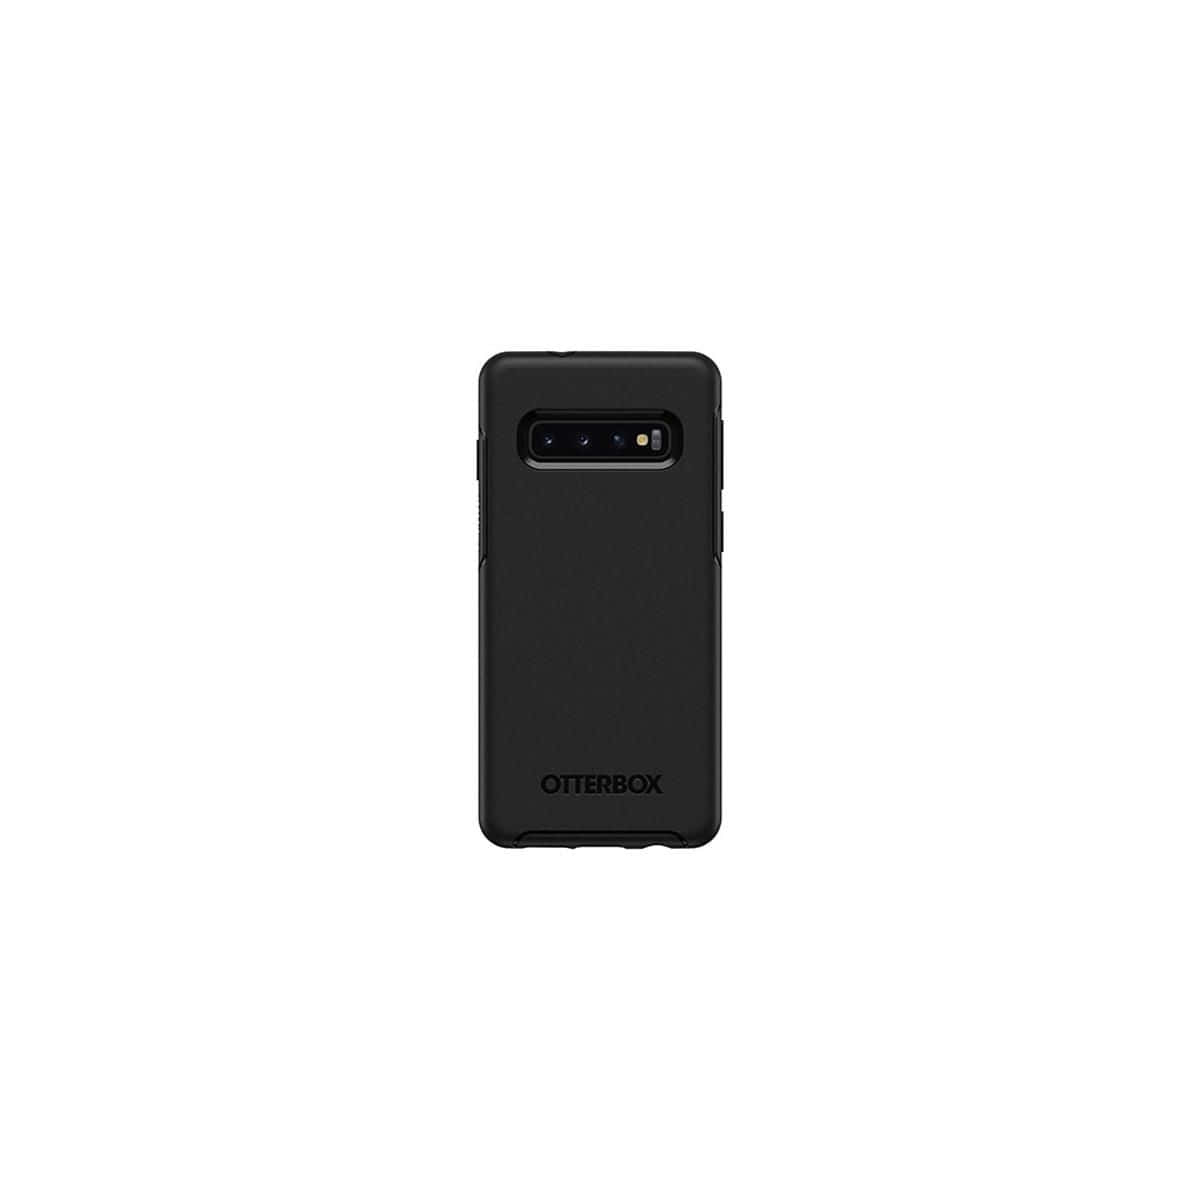 Otterbox Samsung S10 Plus Case